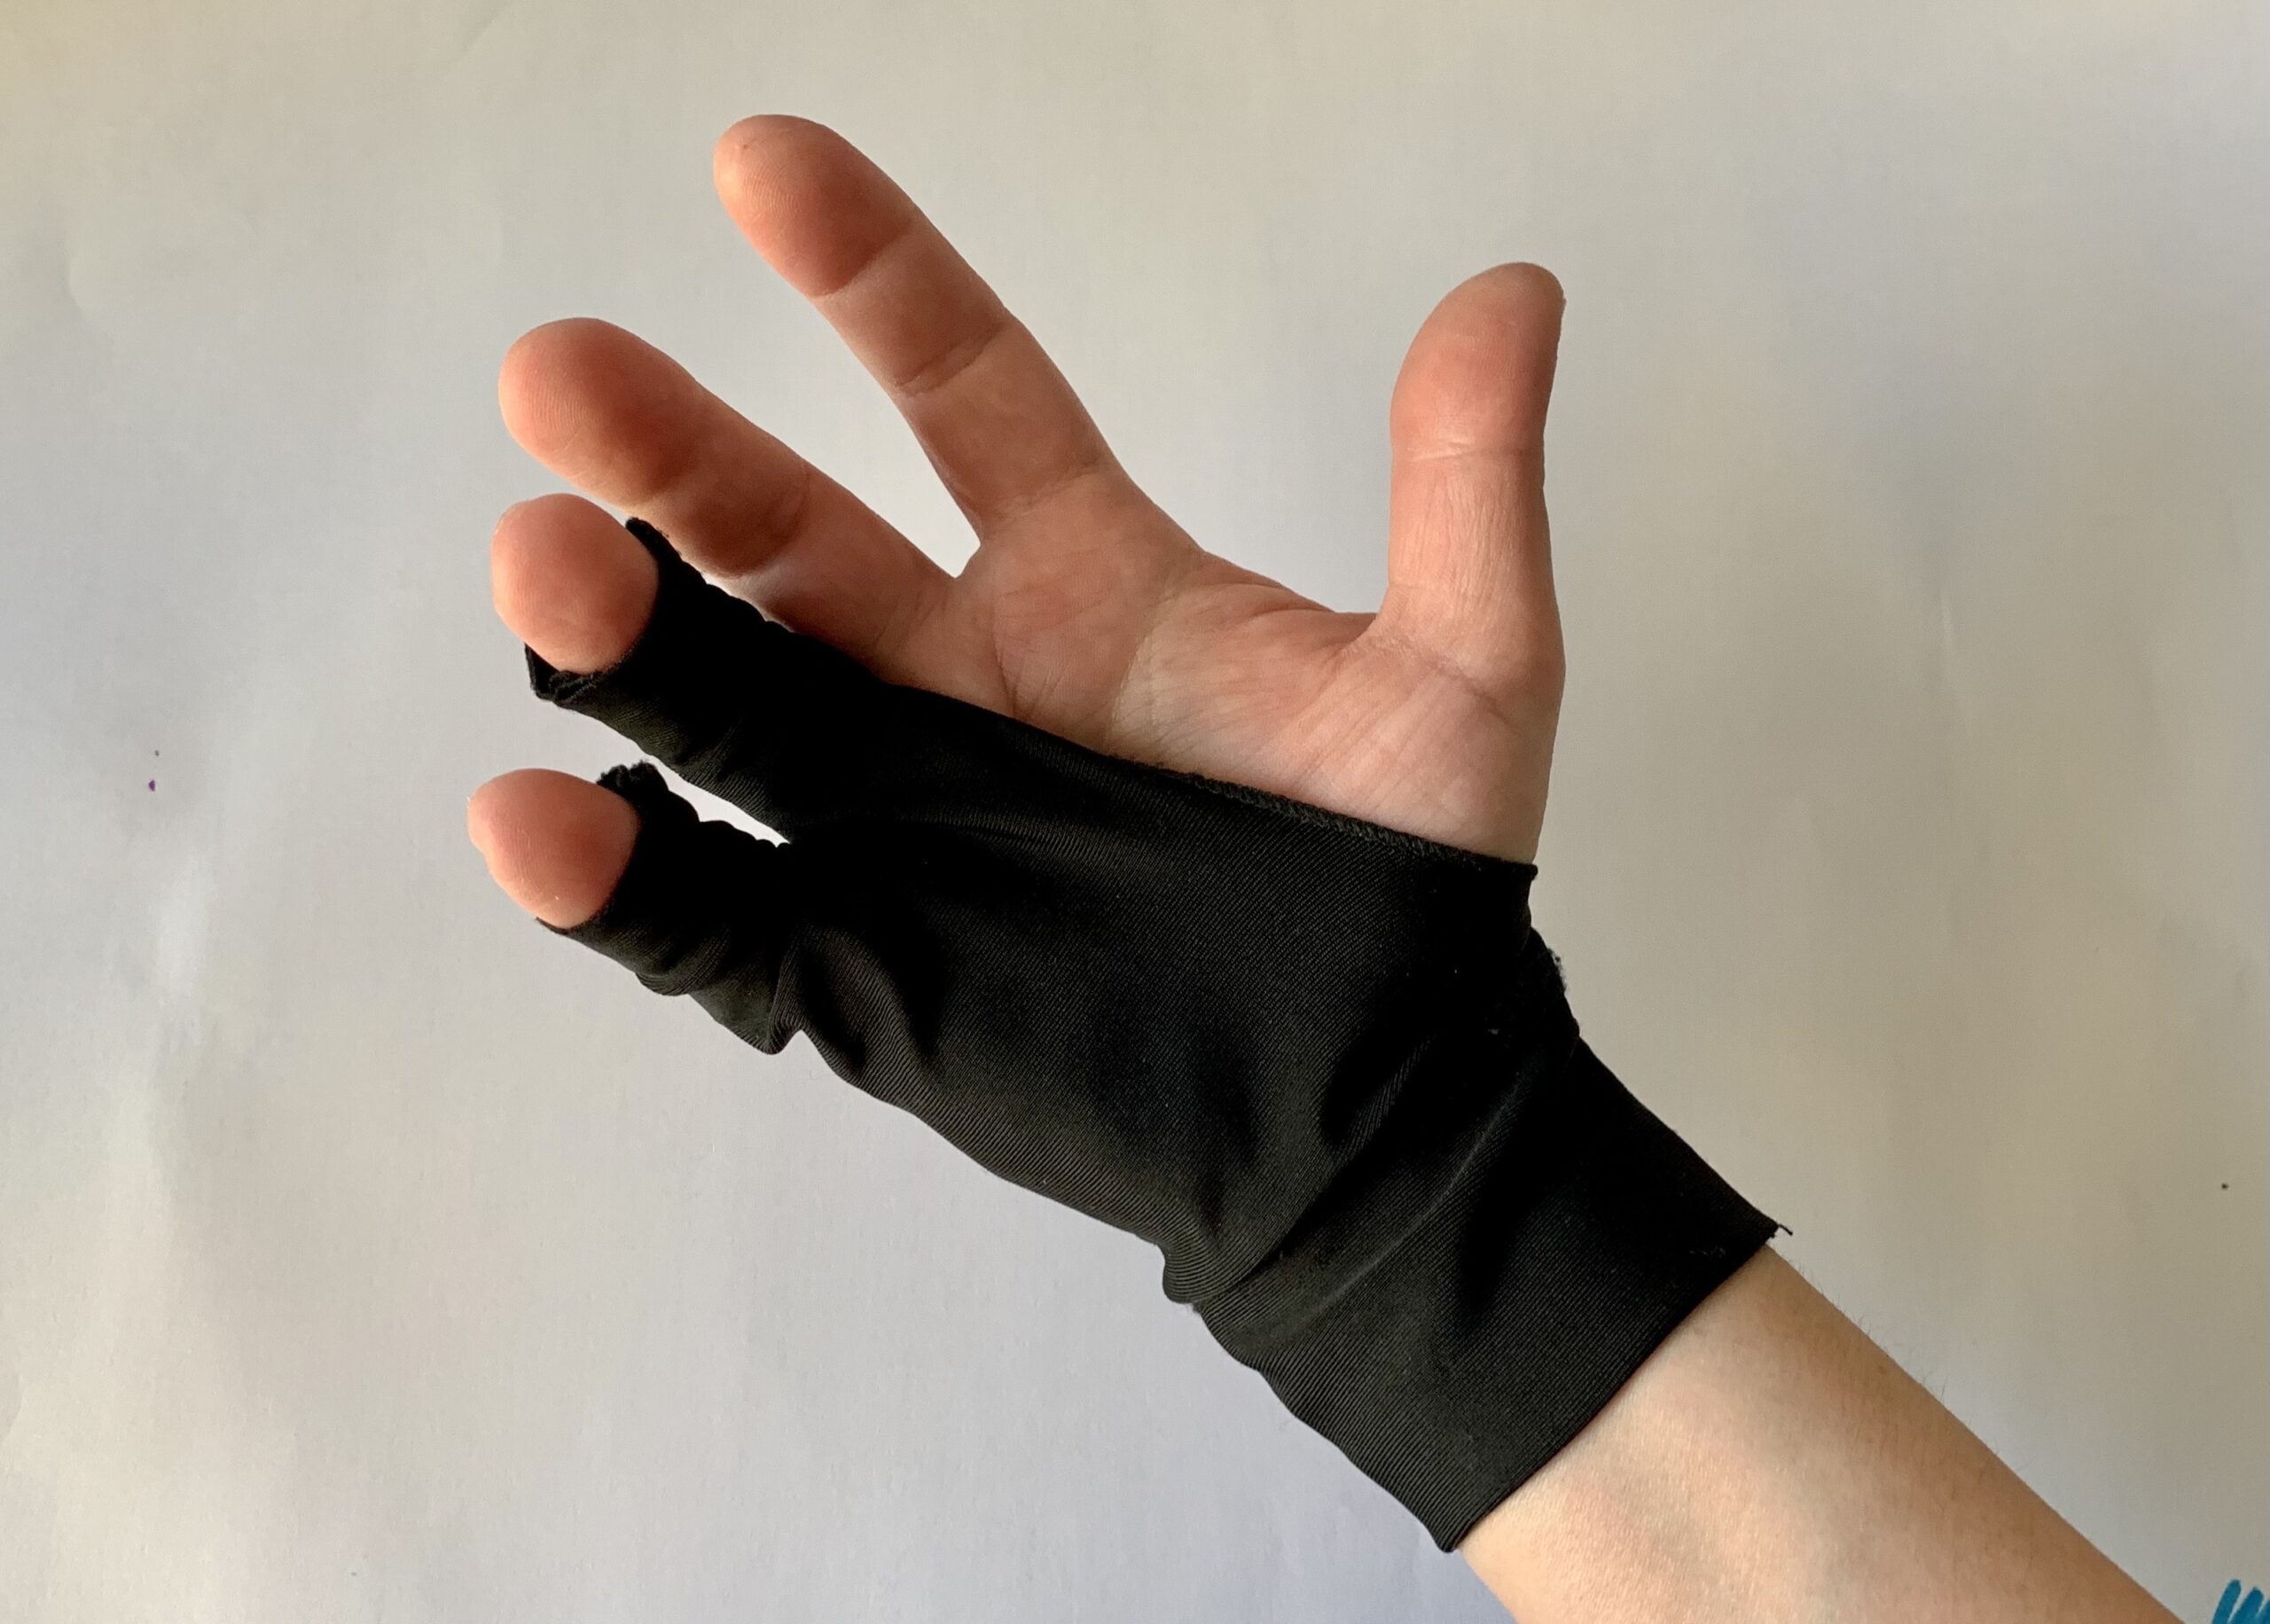 Black Two-finger Dirt Proof Glove Artist Design Drawing Glove